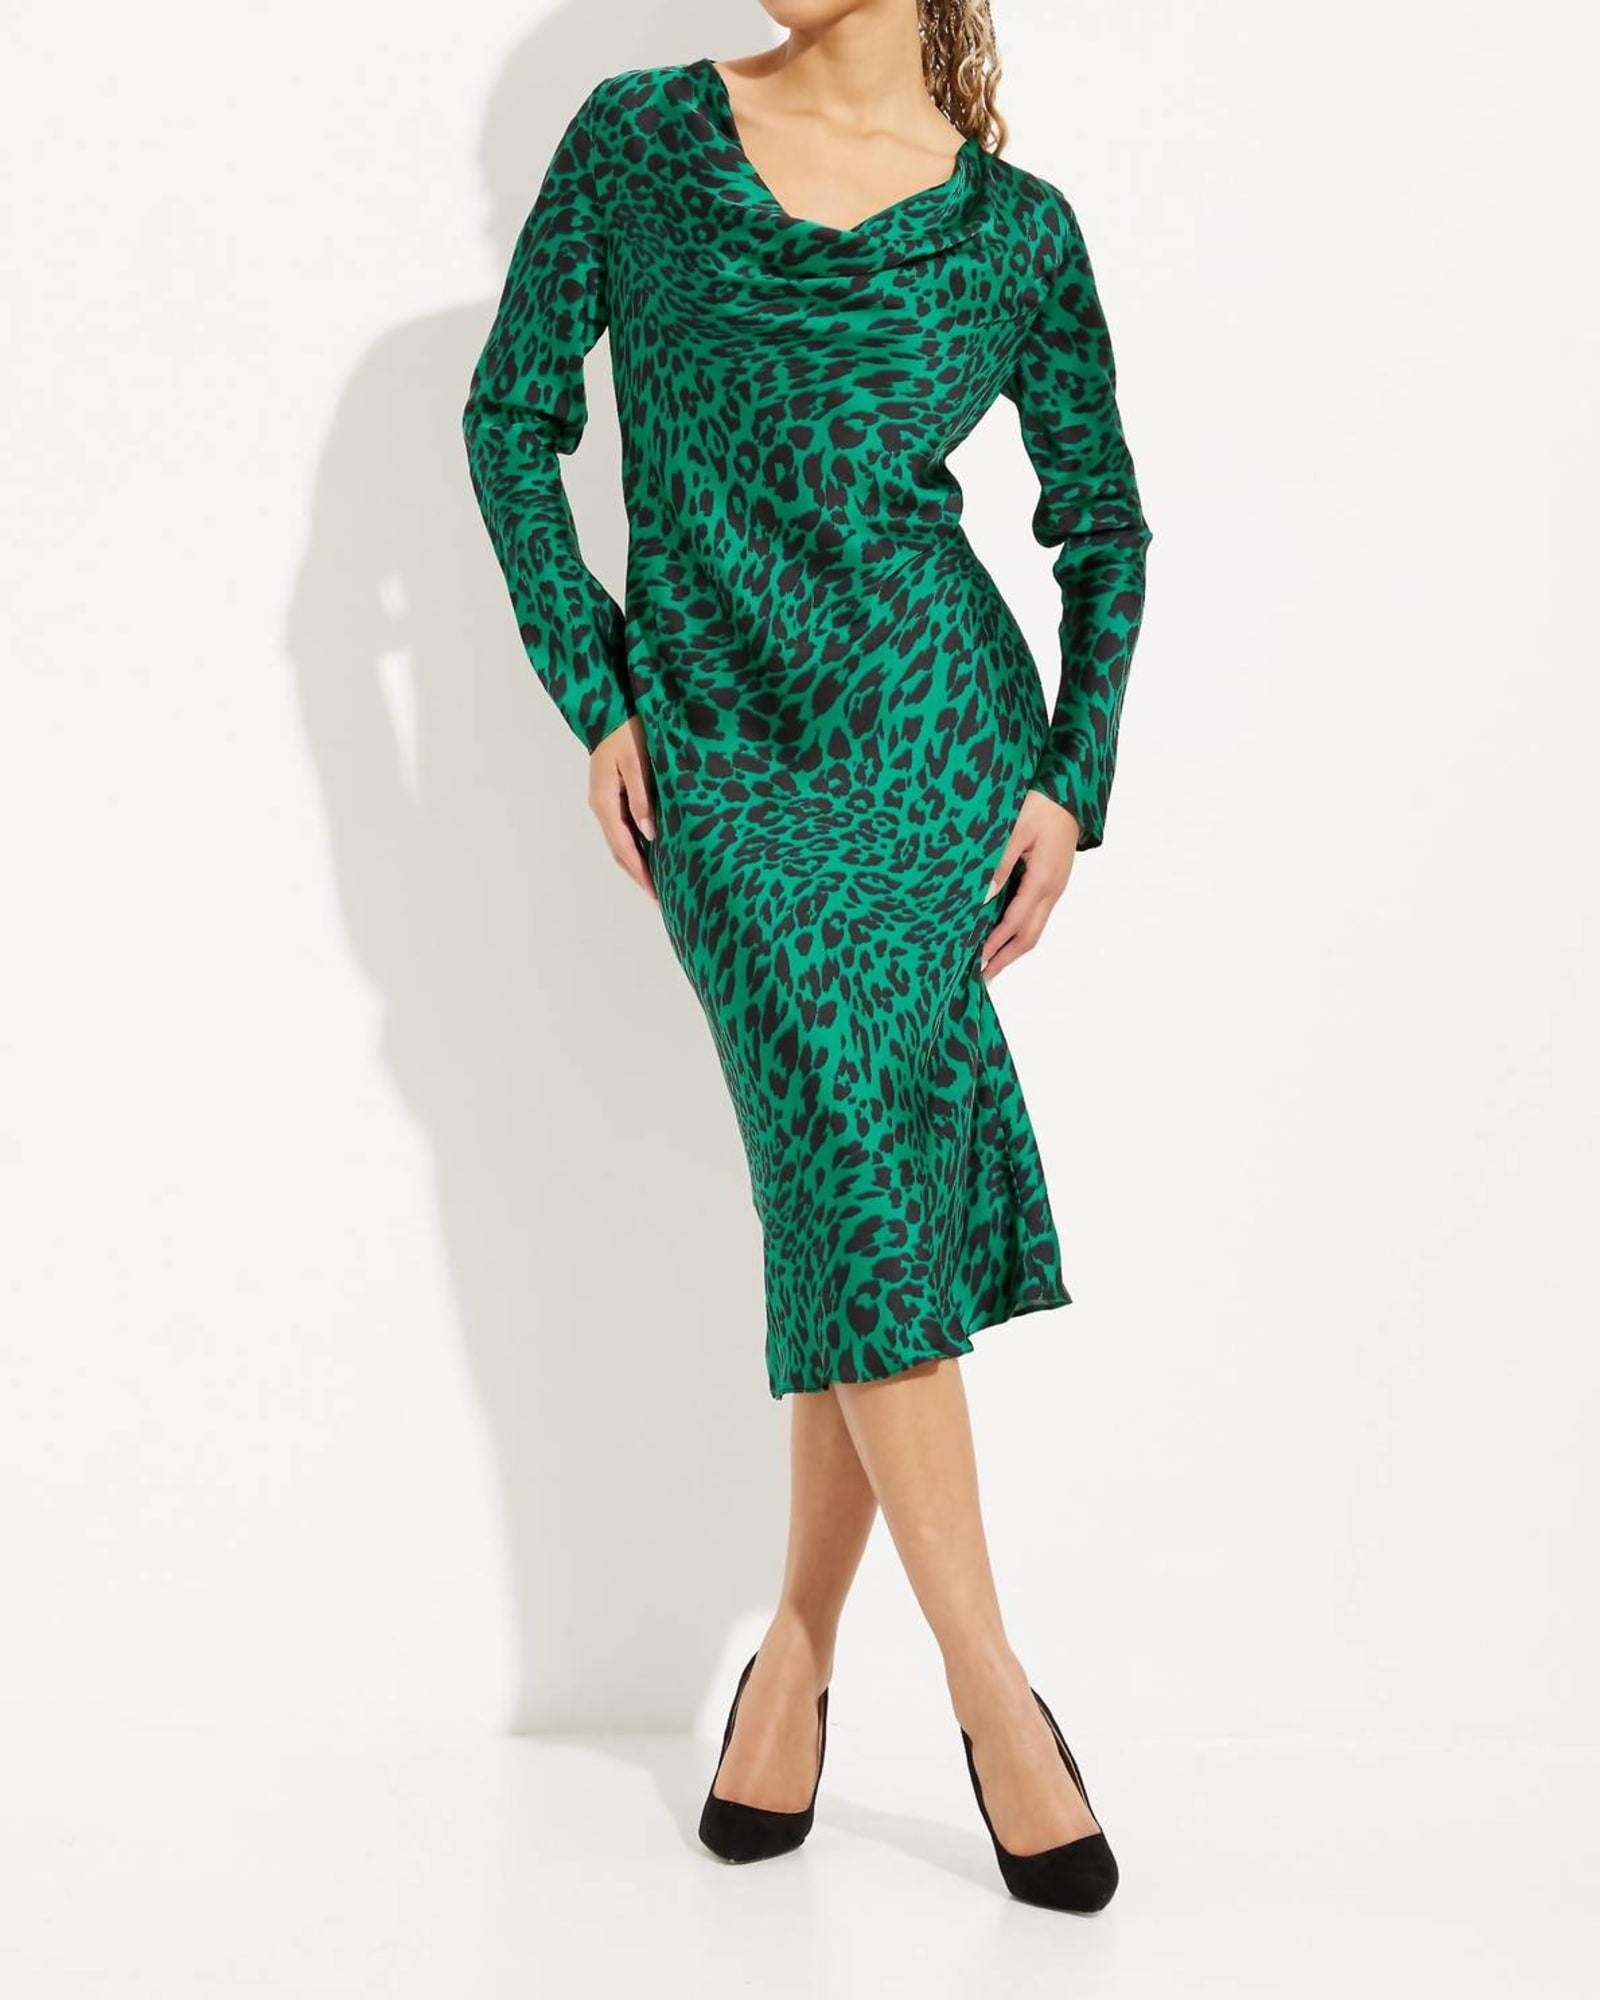 Leopard Print Sheath Dress In Black/Green/Multi | Black/Green/Multi